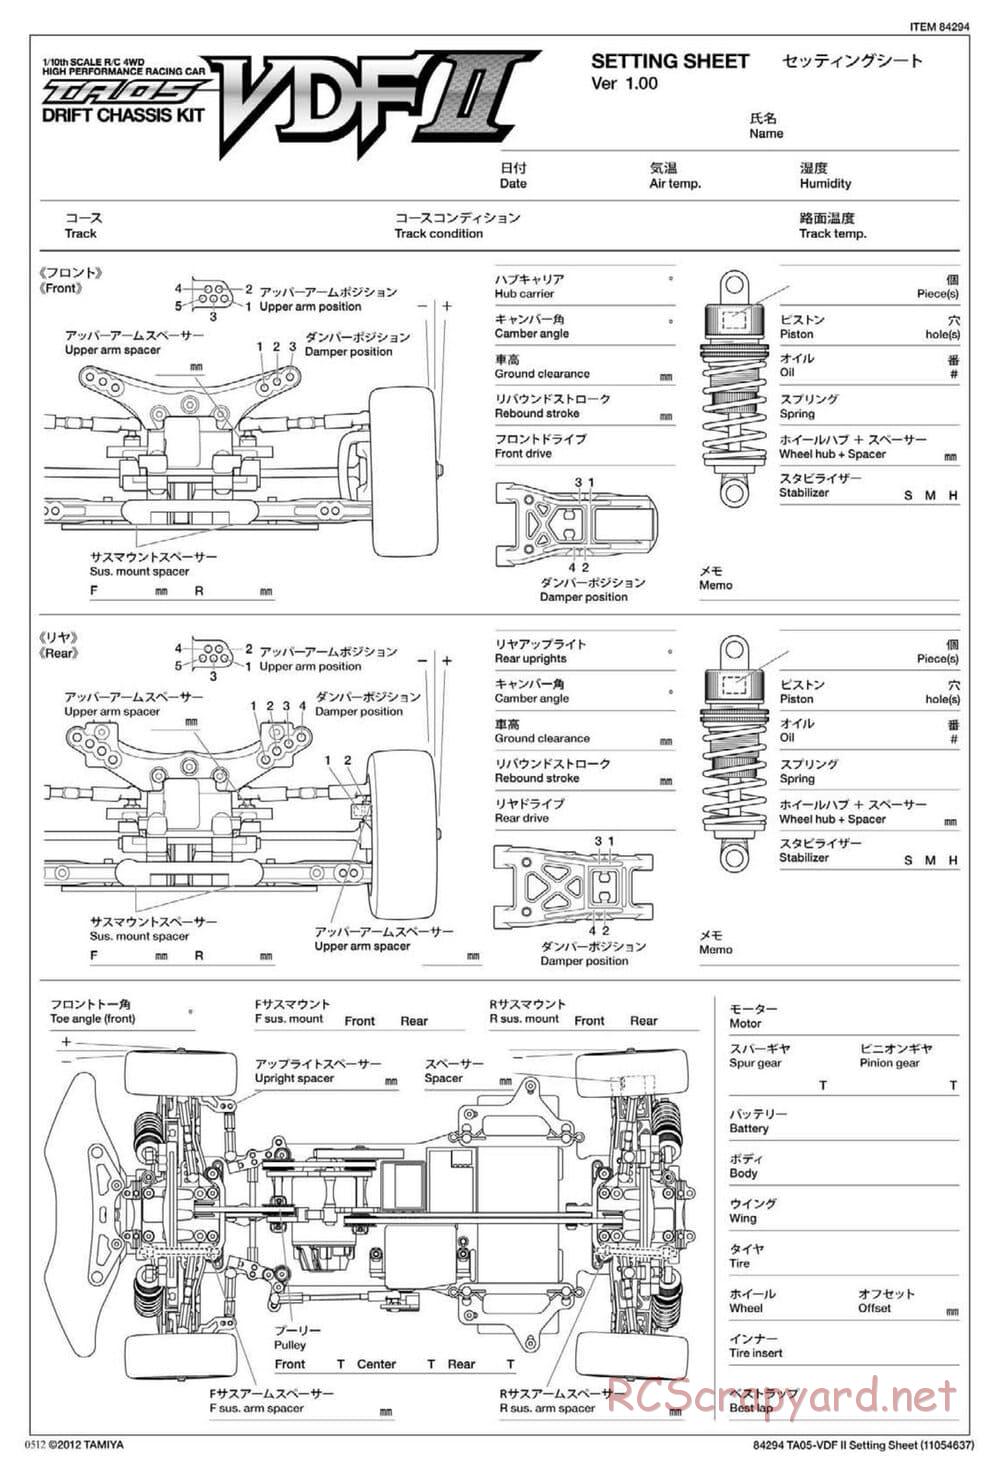 Tamiya - TA05-VDF II Drift Chassis - Manual - Page 33